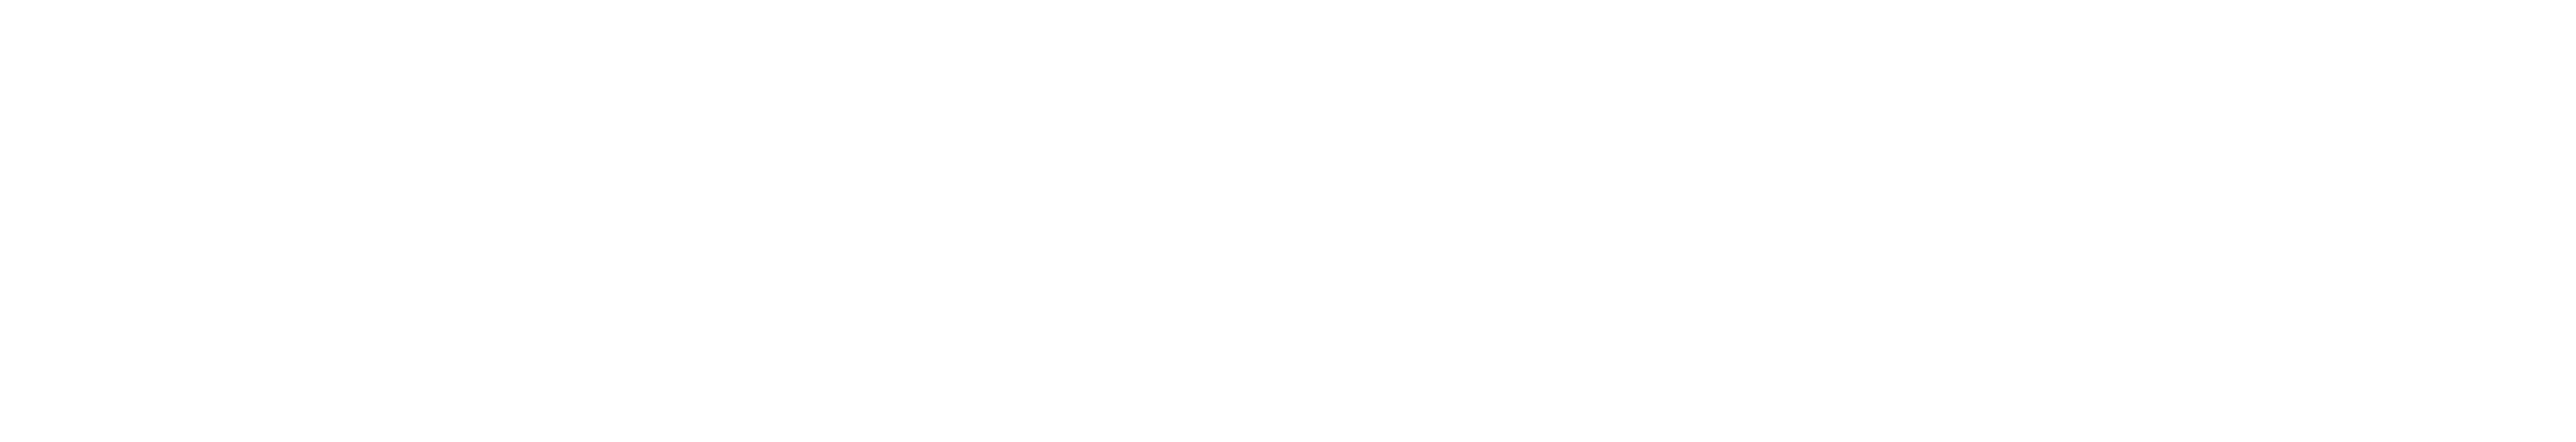 Warragul Community HouseSilver Mastercard